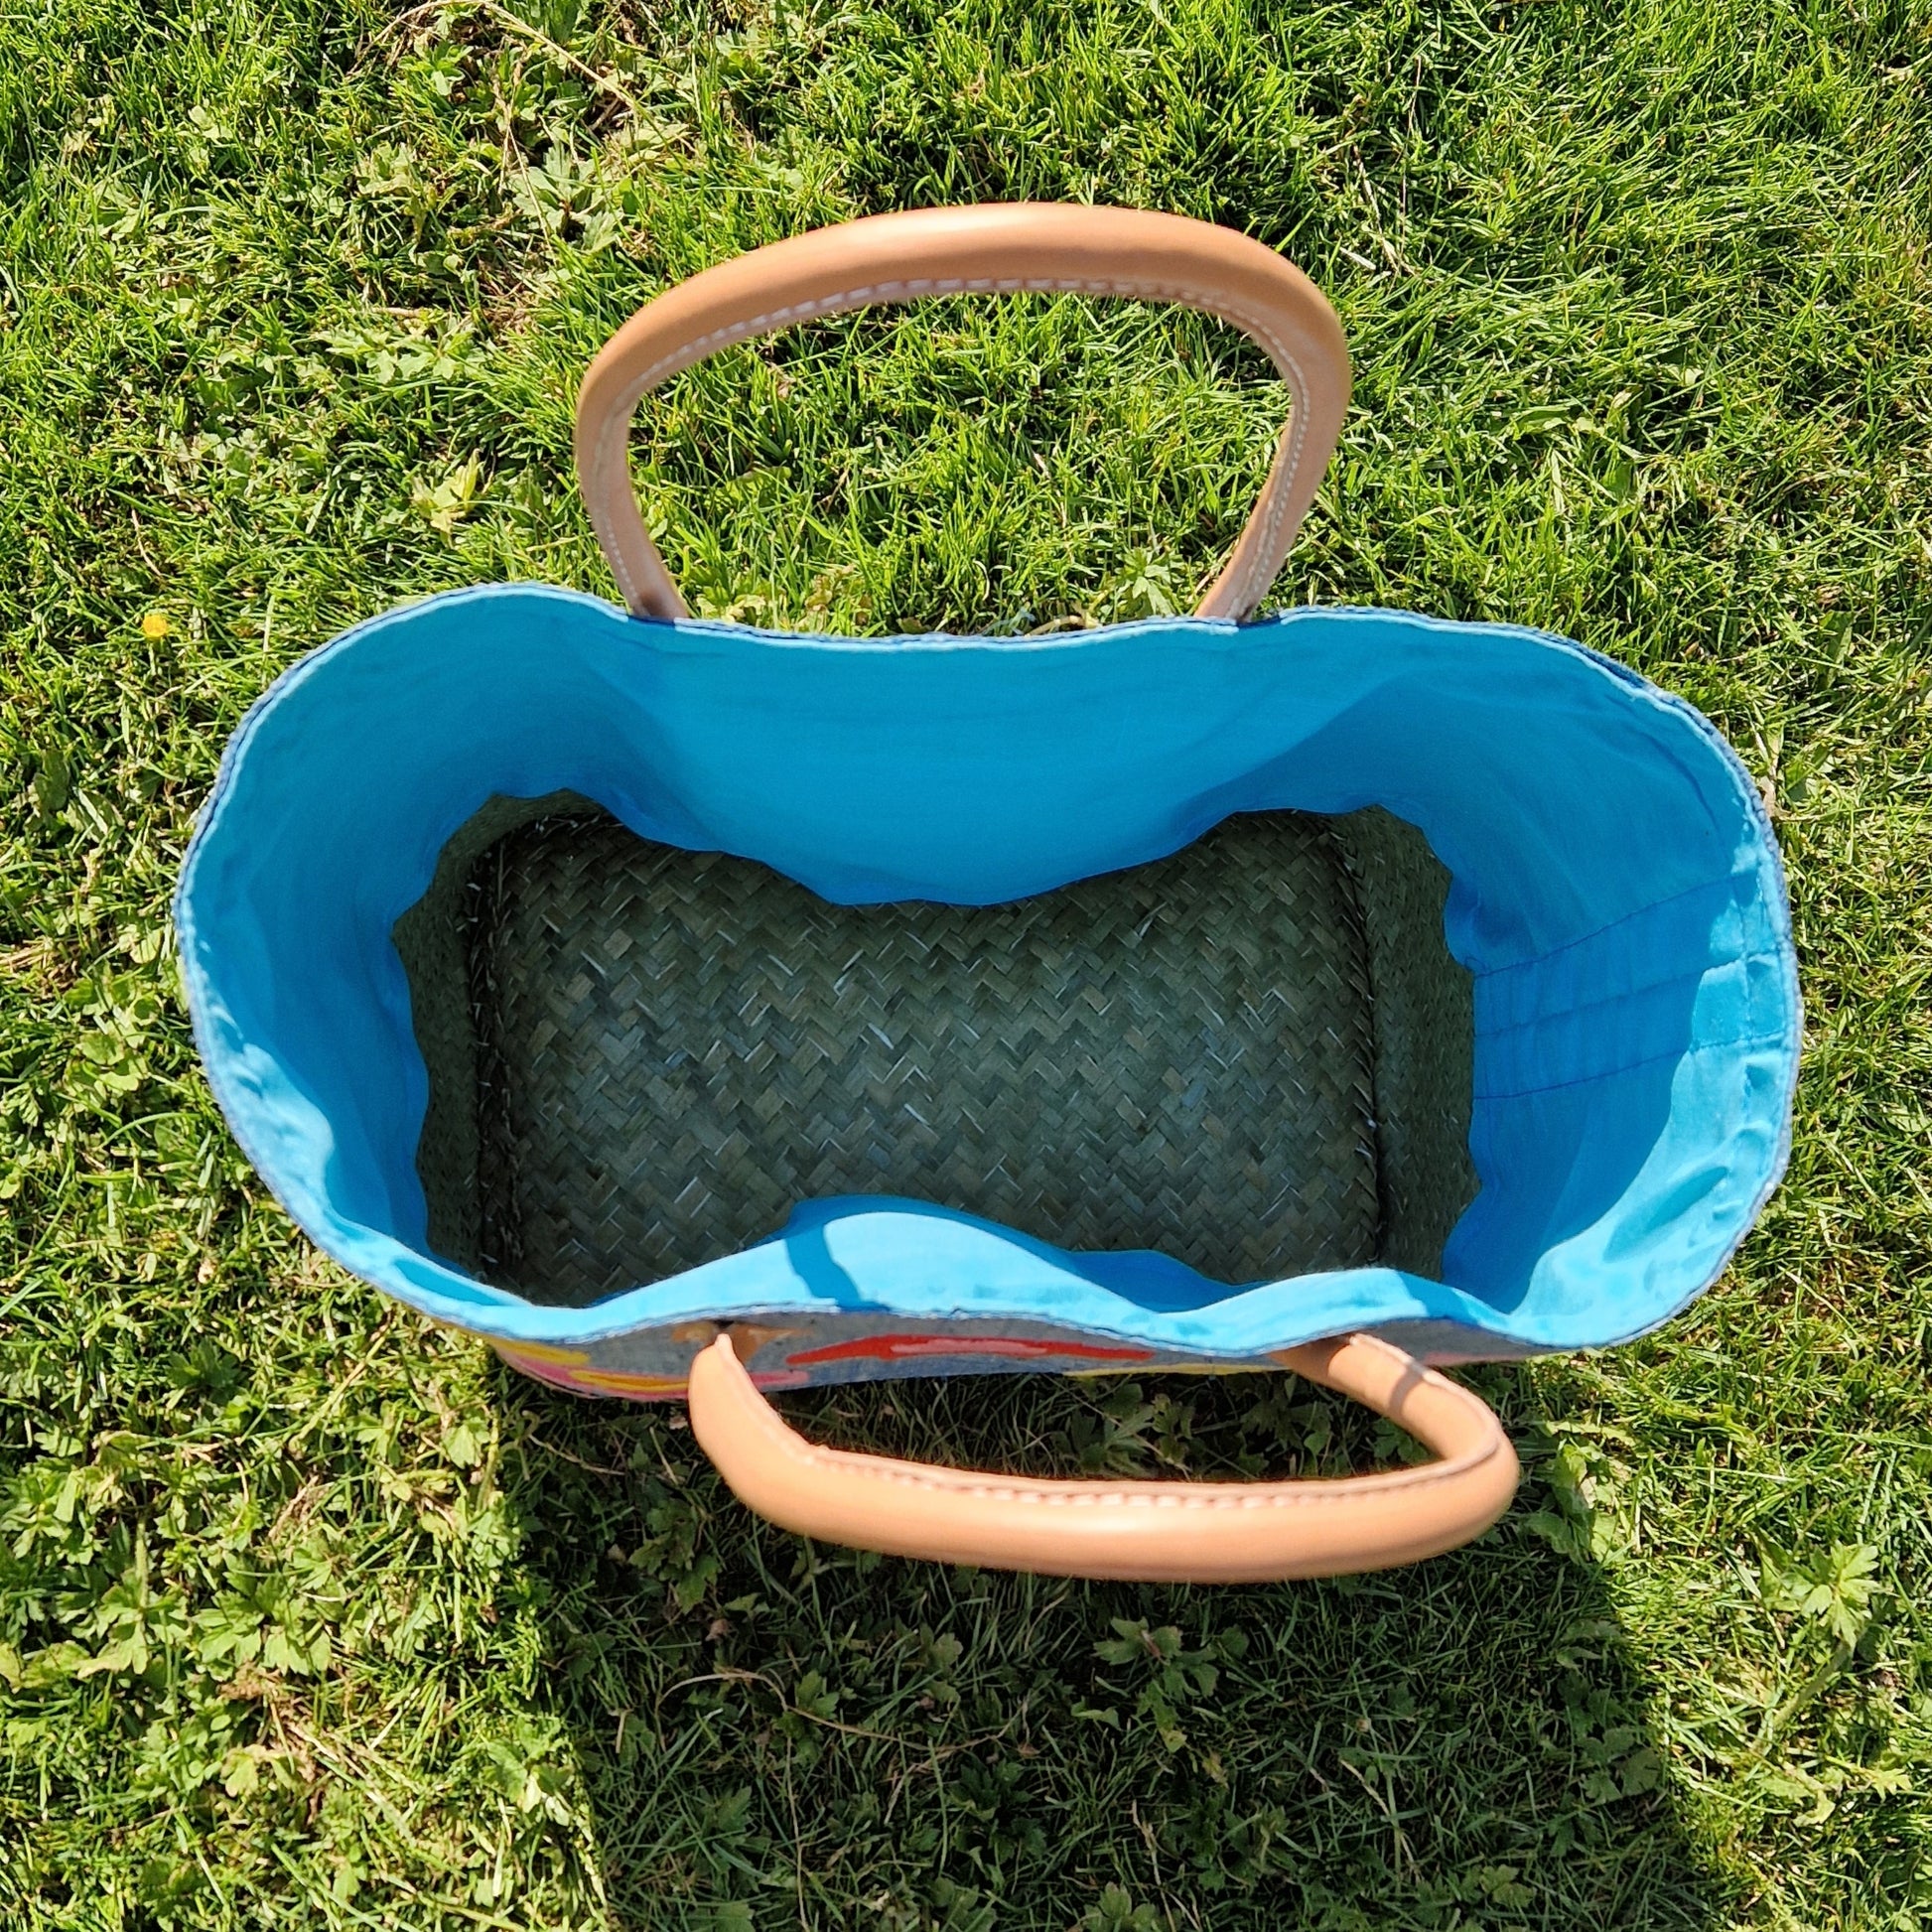 View inside teal blue raffia basket.